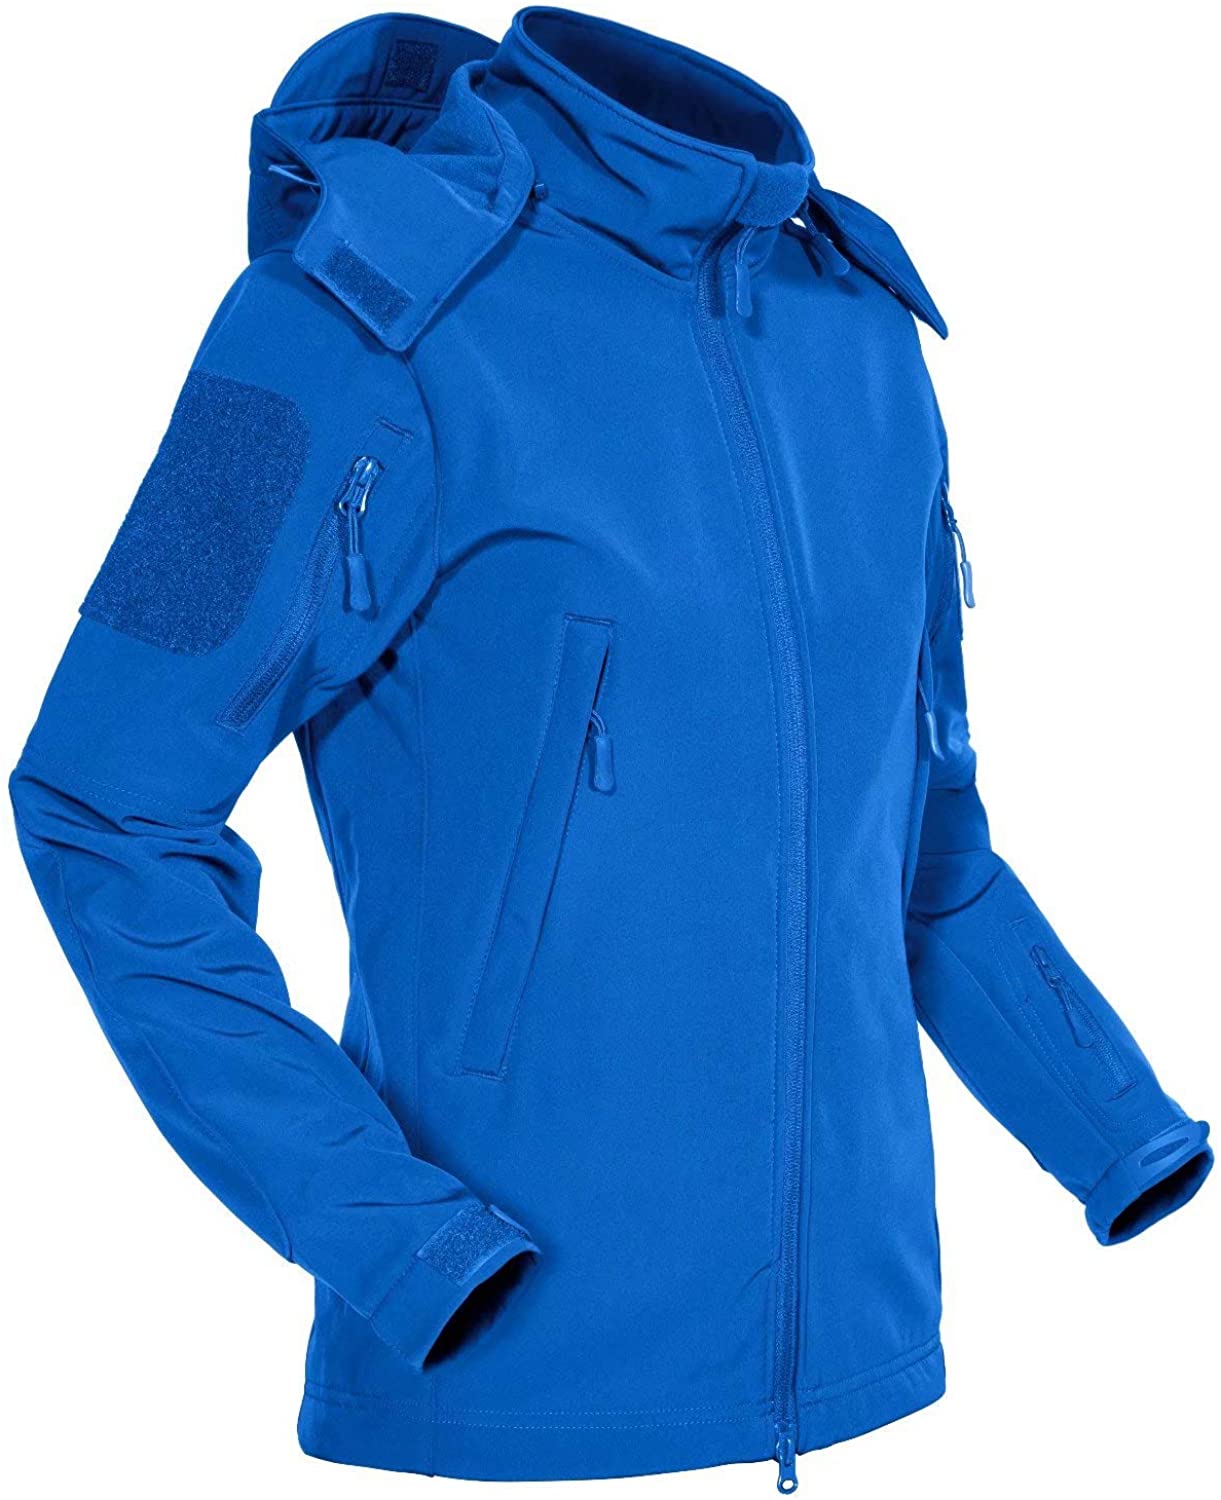 MAGCOMSEN Women's Hooded Winter Snow Ski Rain Jacket 6 Pockets Waterproof Windproof Softshell Fleece Coat